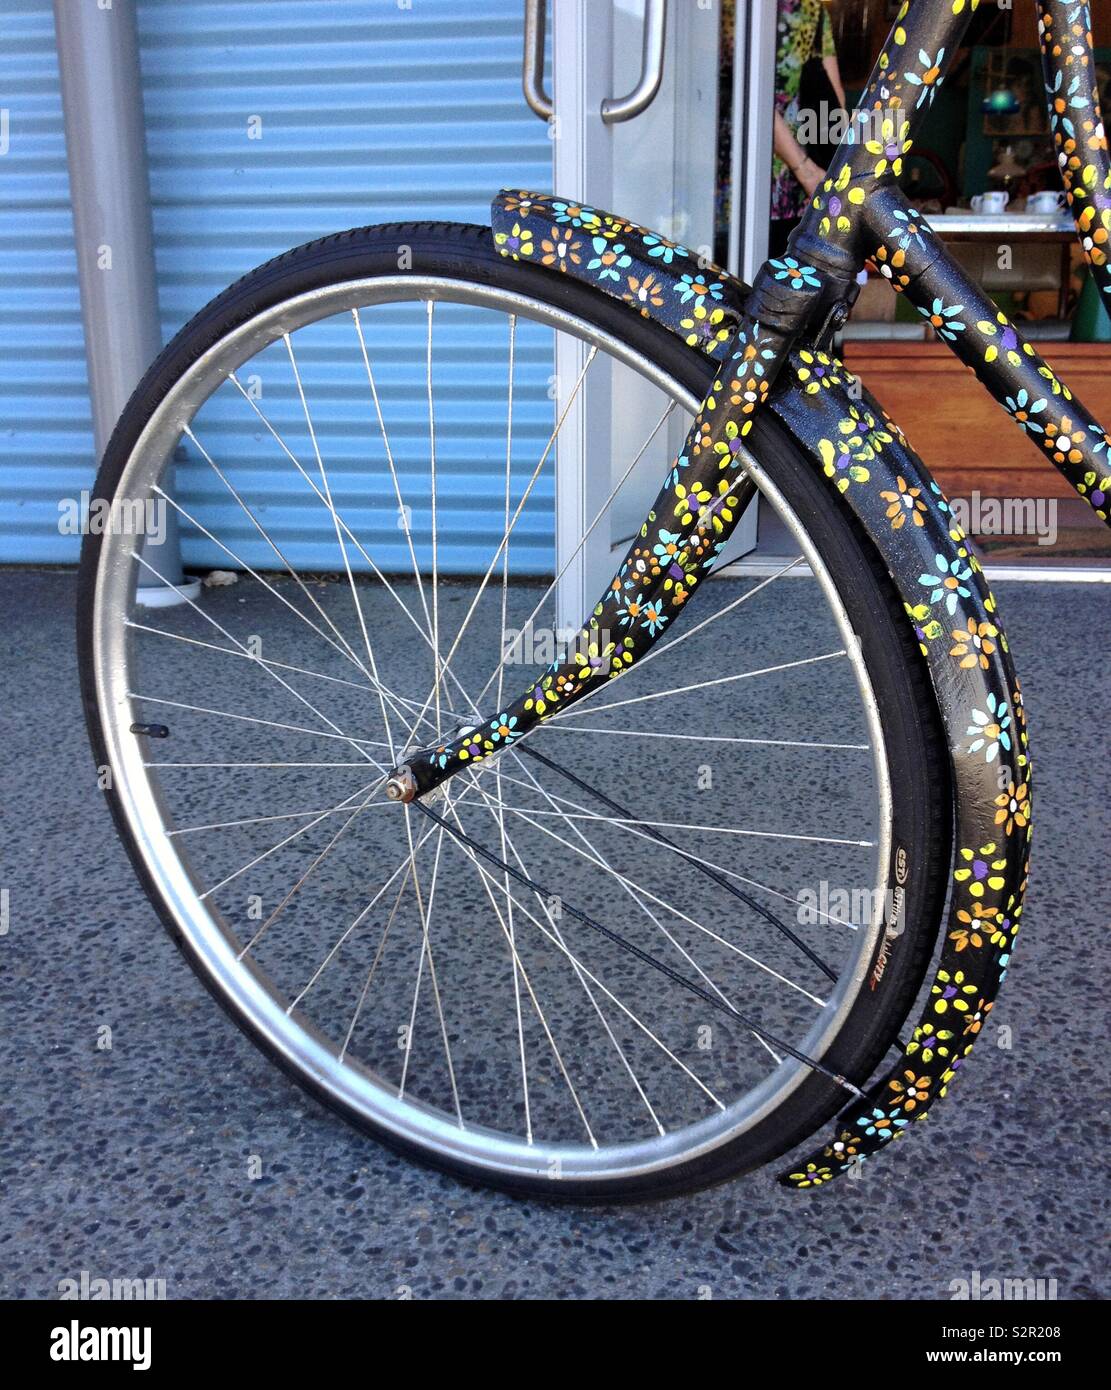 Retro bike wheel with flowers Stock Photo